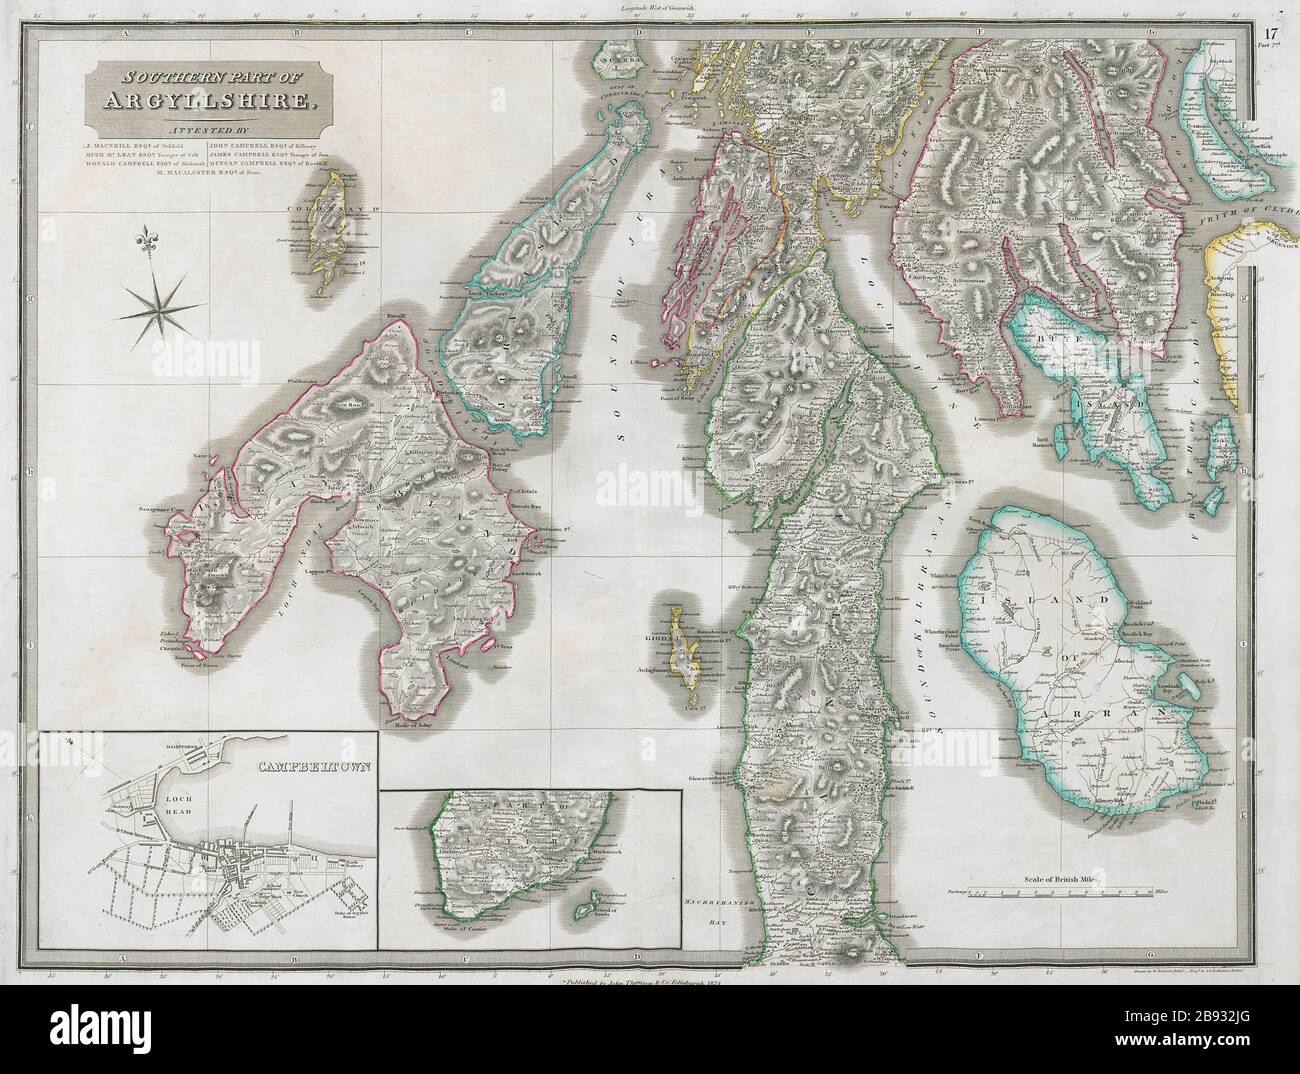 Argyllshire south Campbeltown Bute Lagavulin Islay Jura Kintyre THOMSON 1832 map Stock Photo